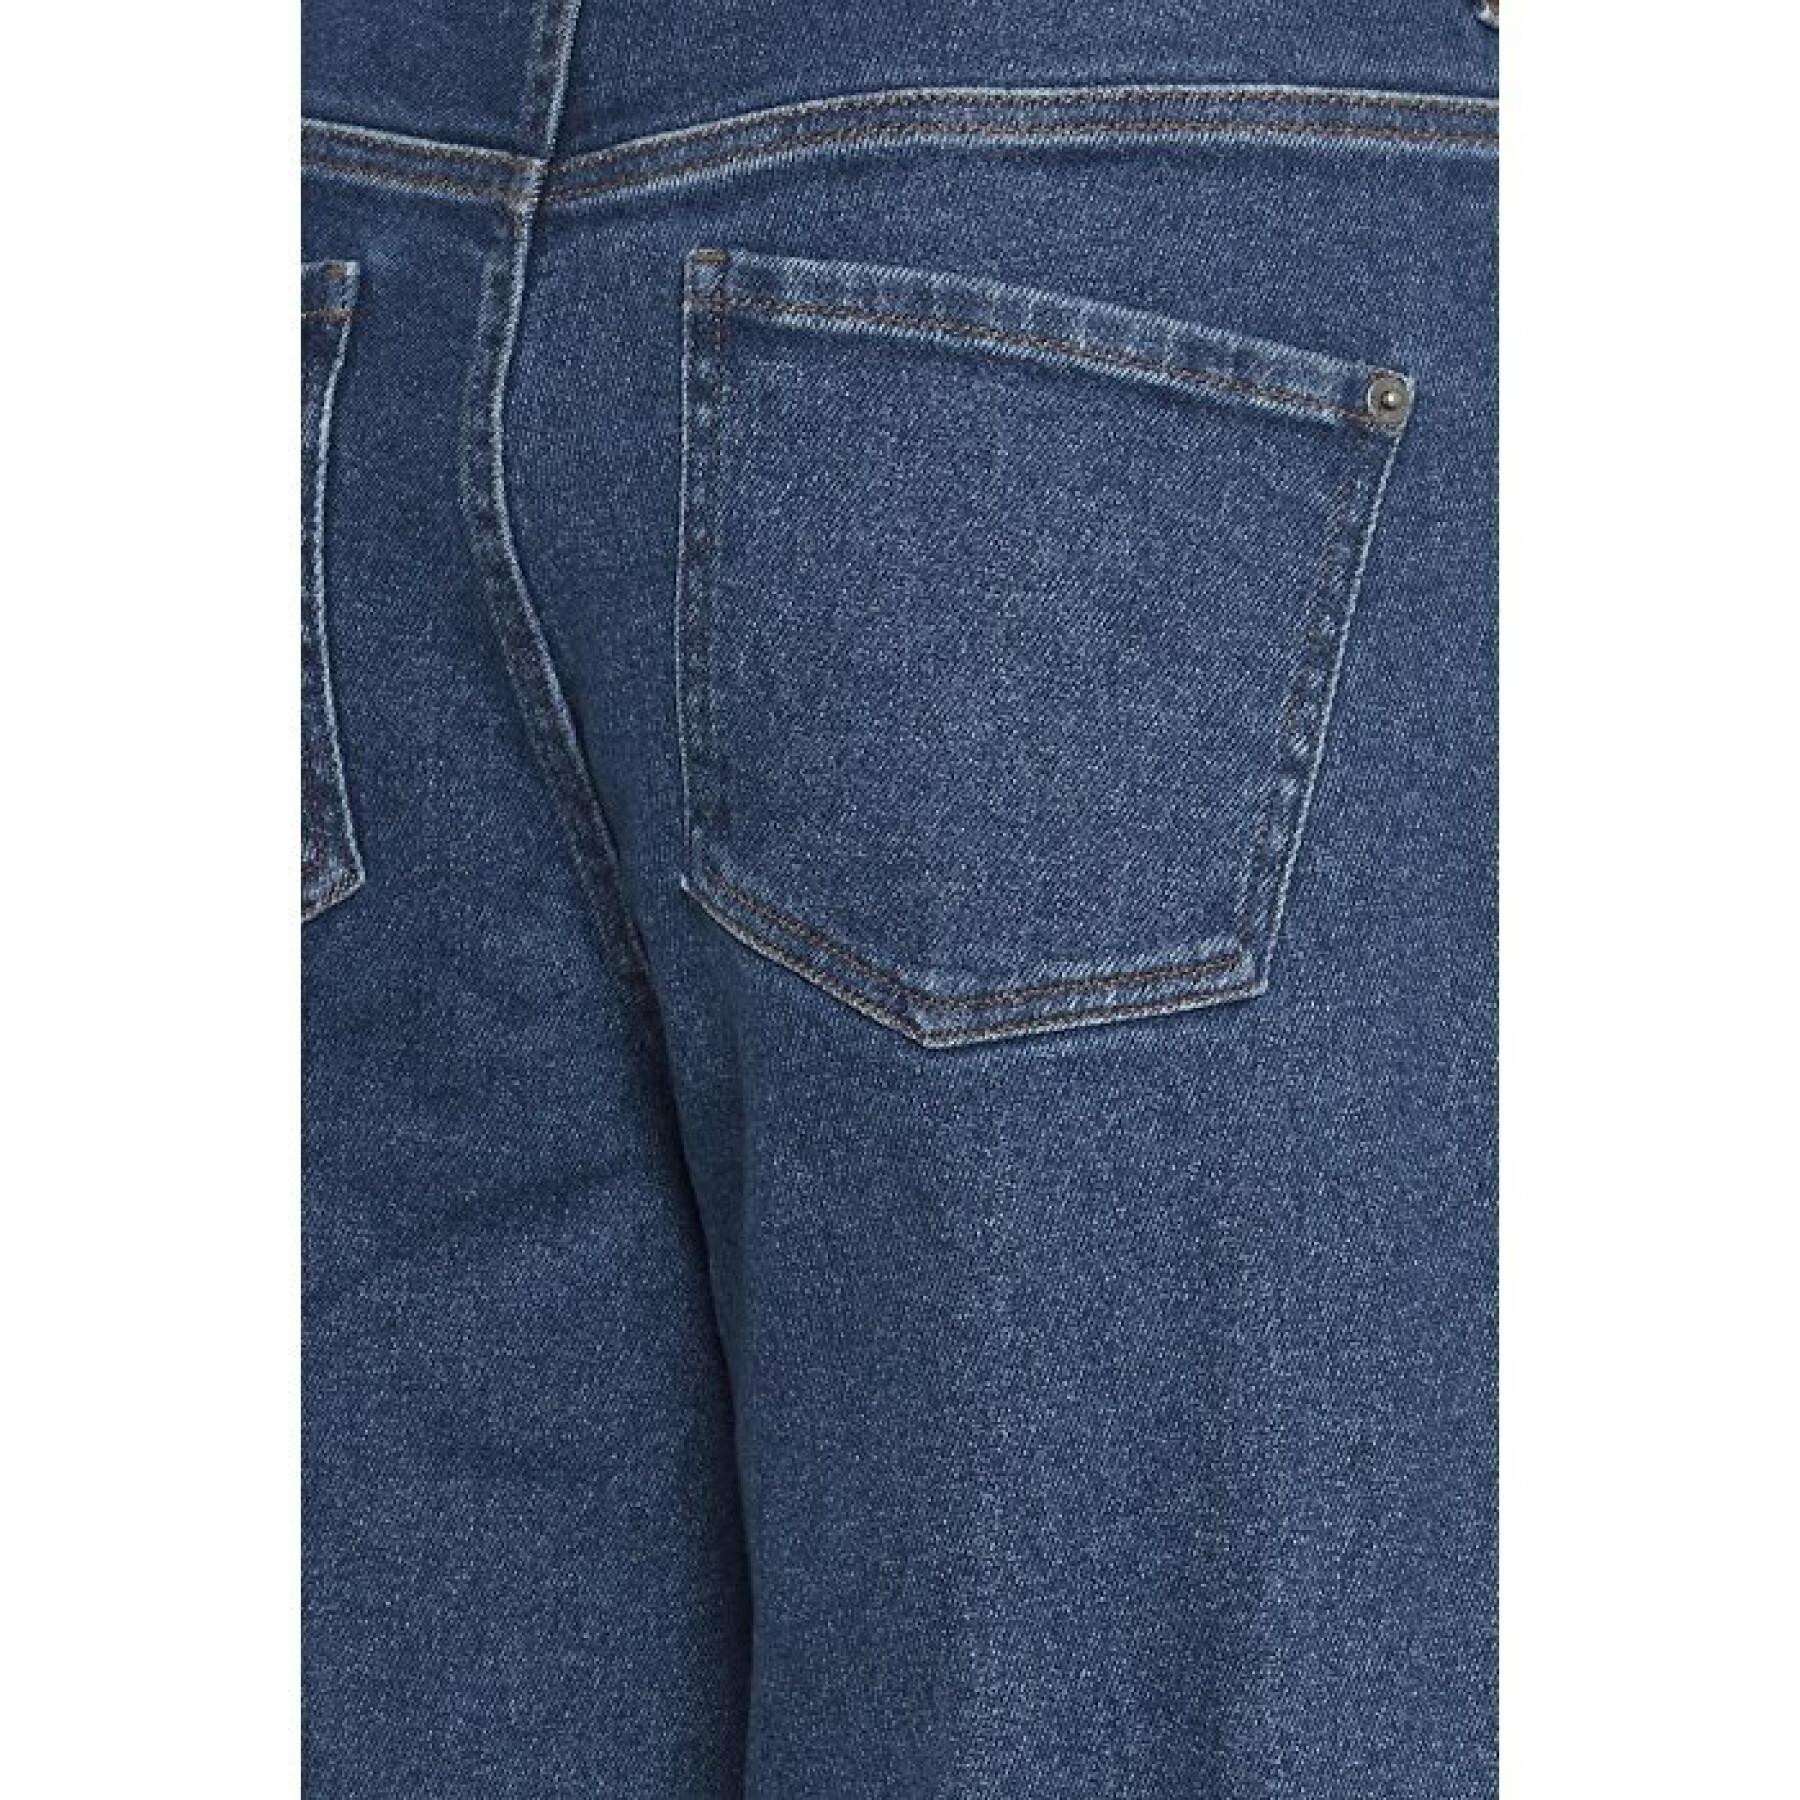 Women's wide-leg jeans Ichi Ihpreslie